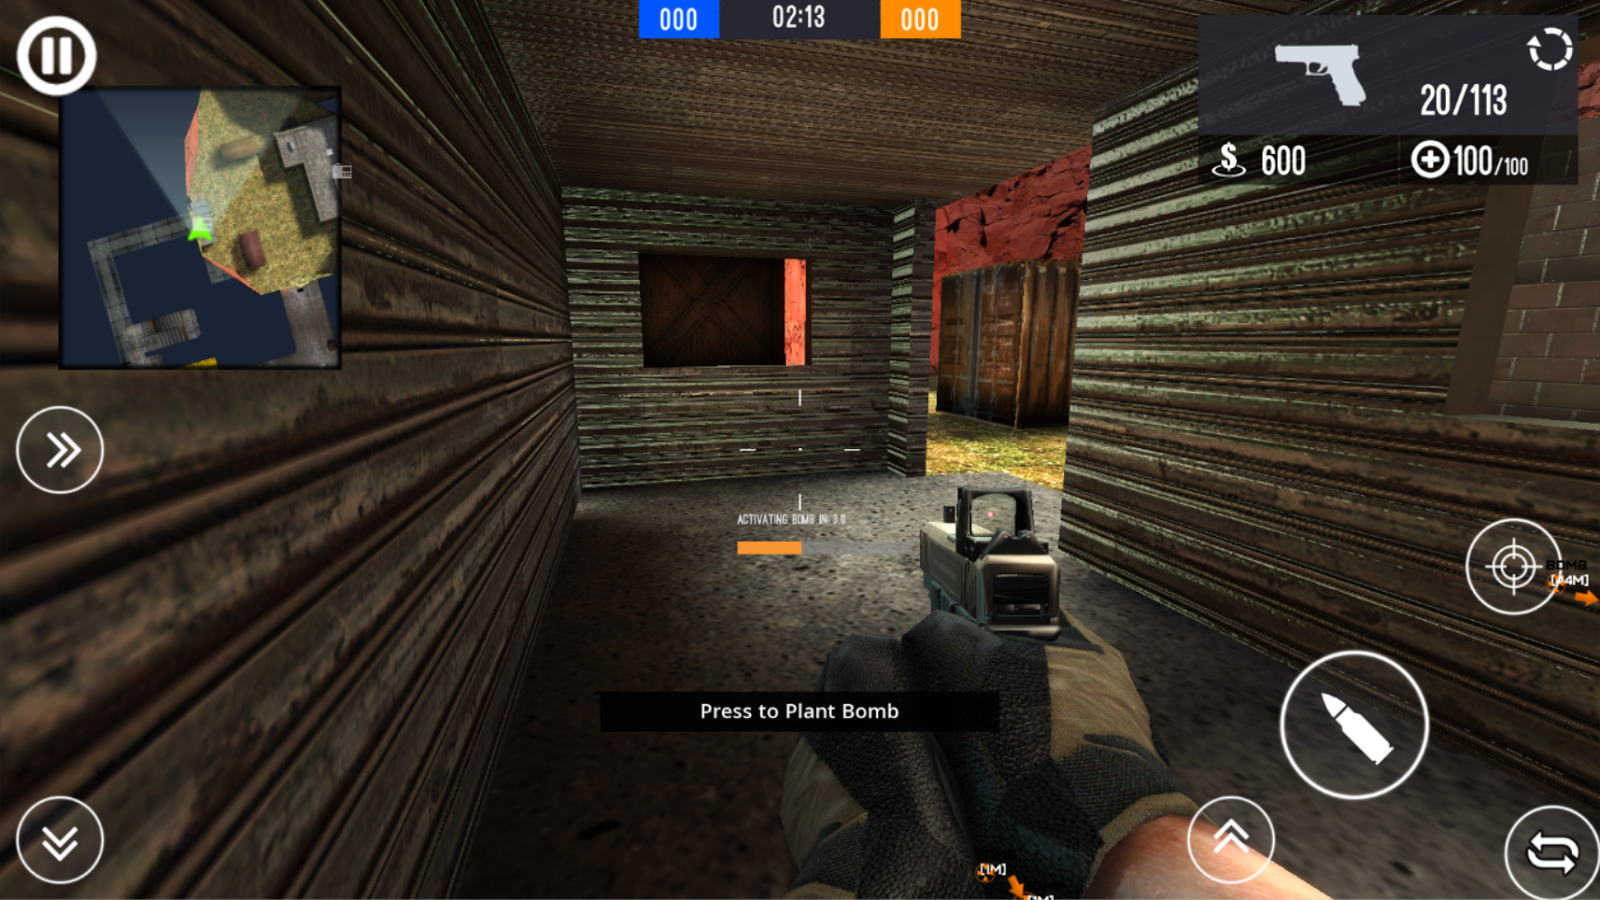 Download Game Bullet Strike Mod Apk Eaglemystic - mod apk roblox kindle fire